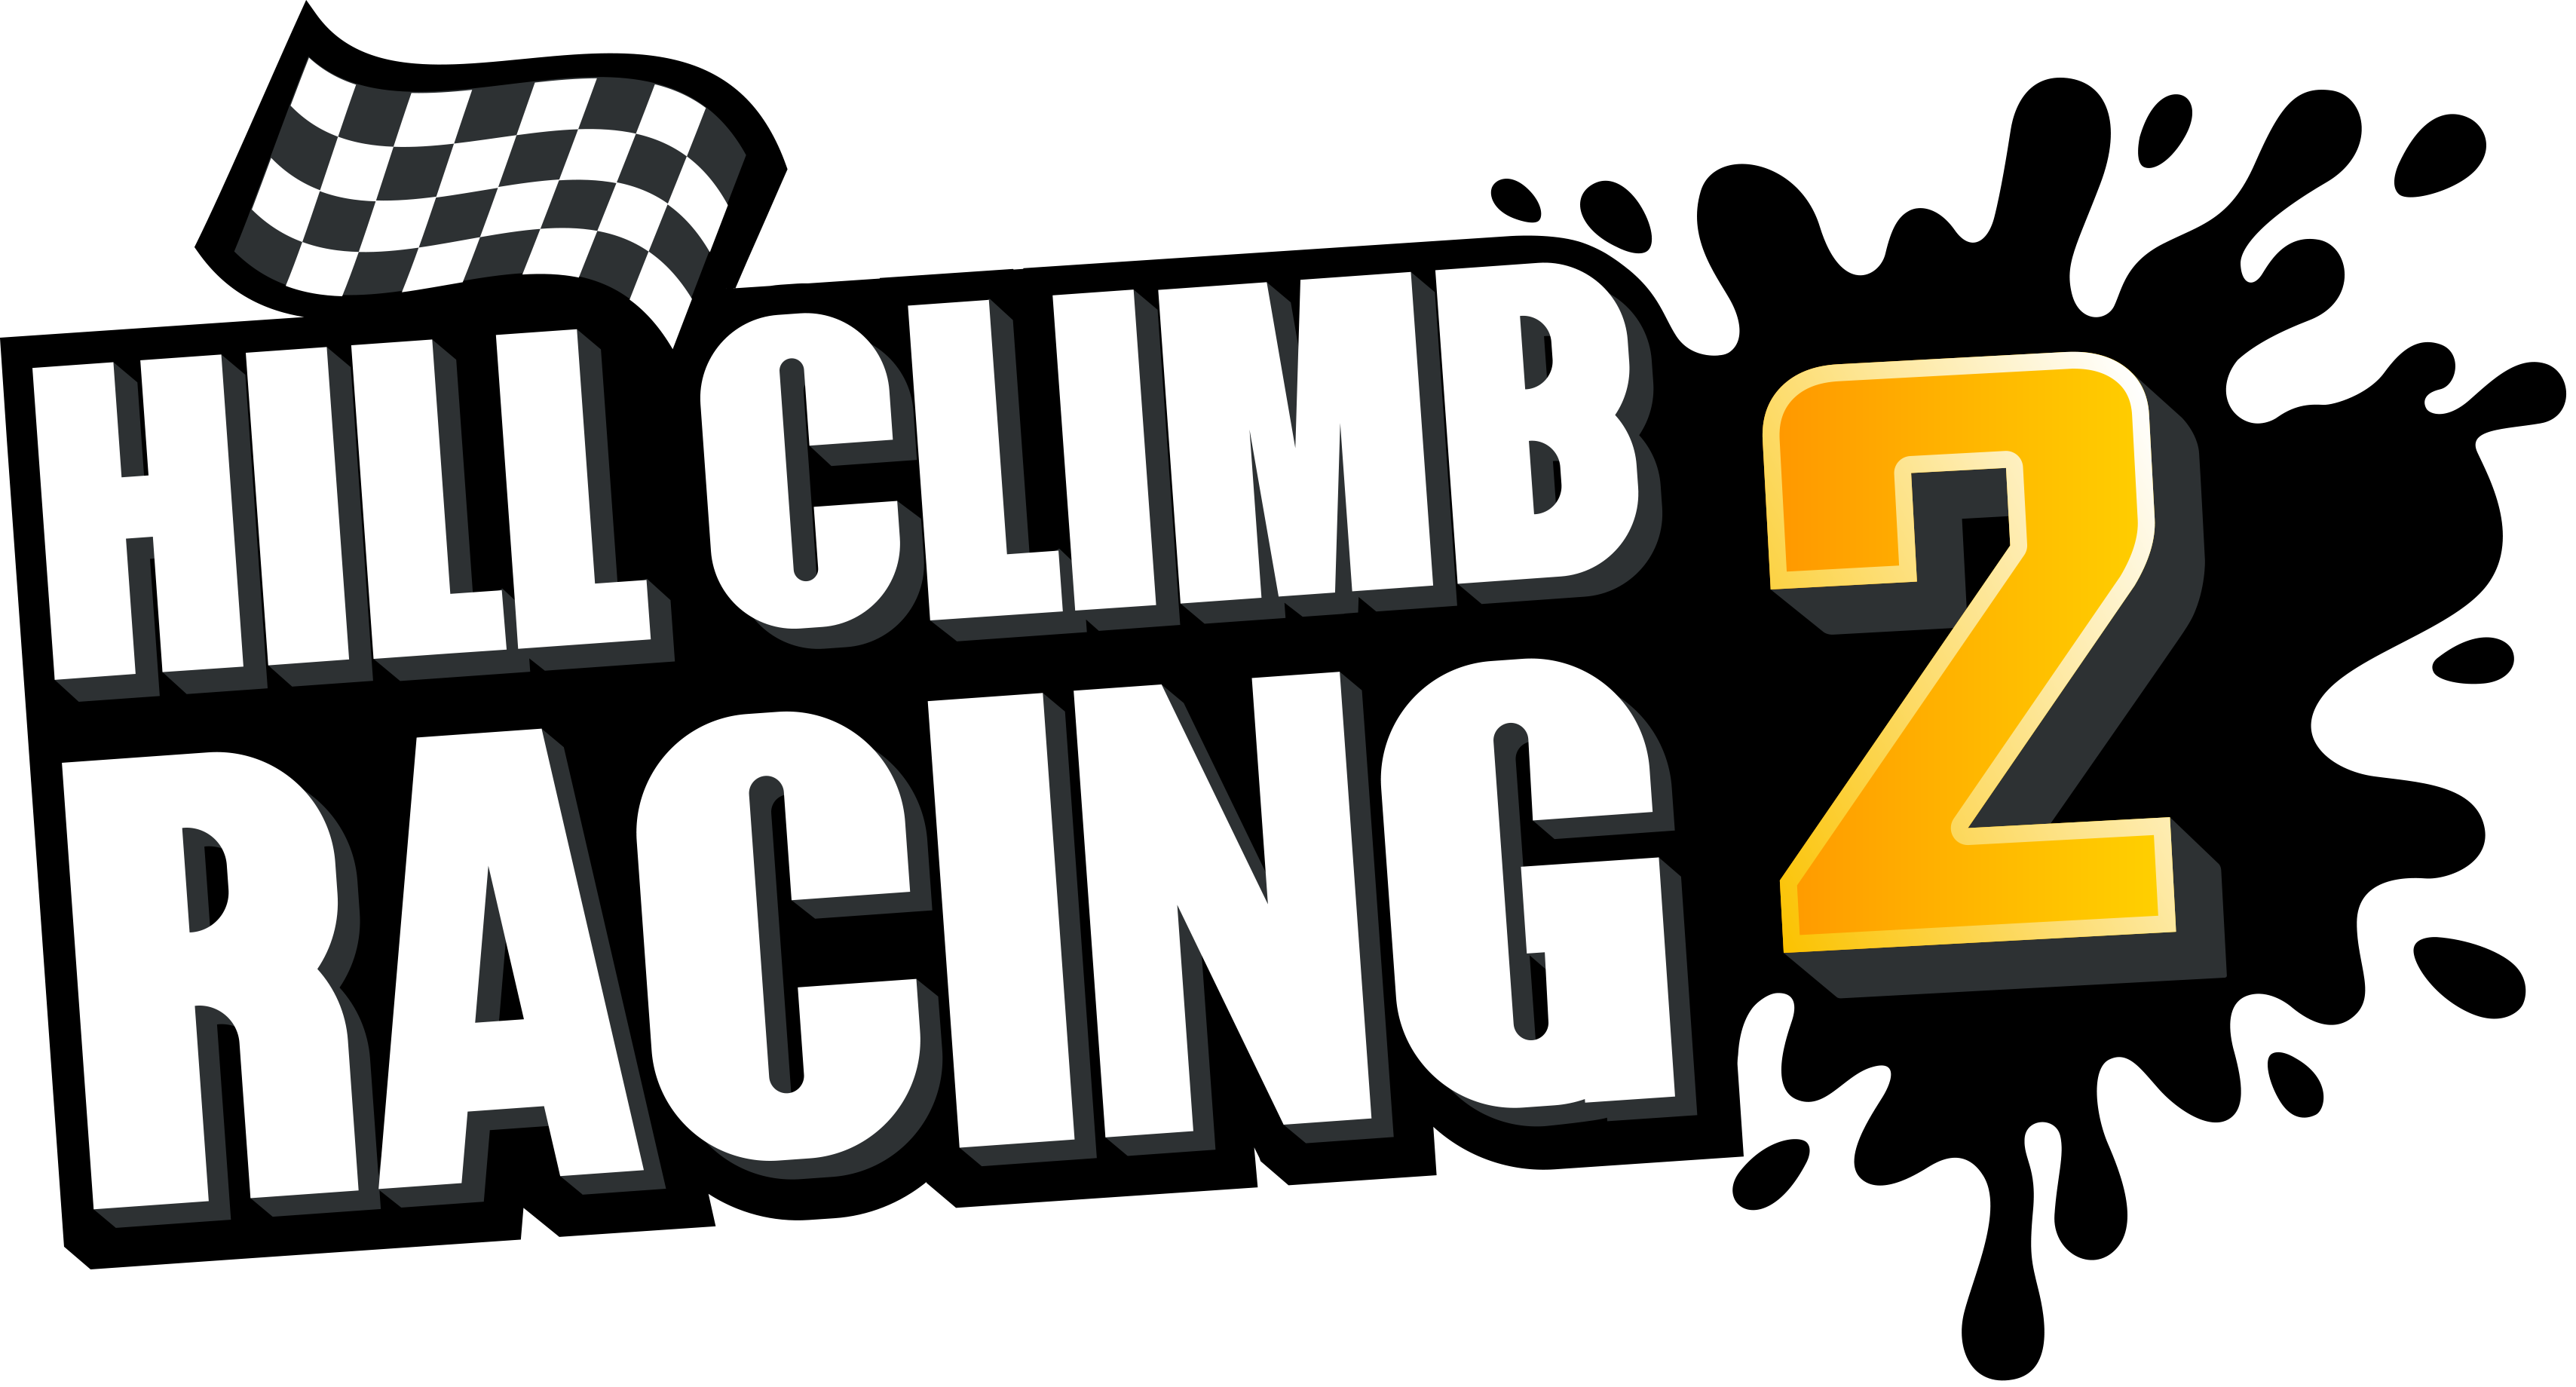 Hill climb racing 2 online game